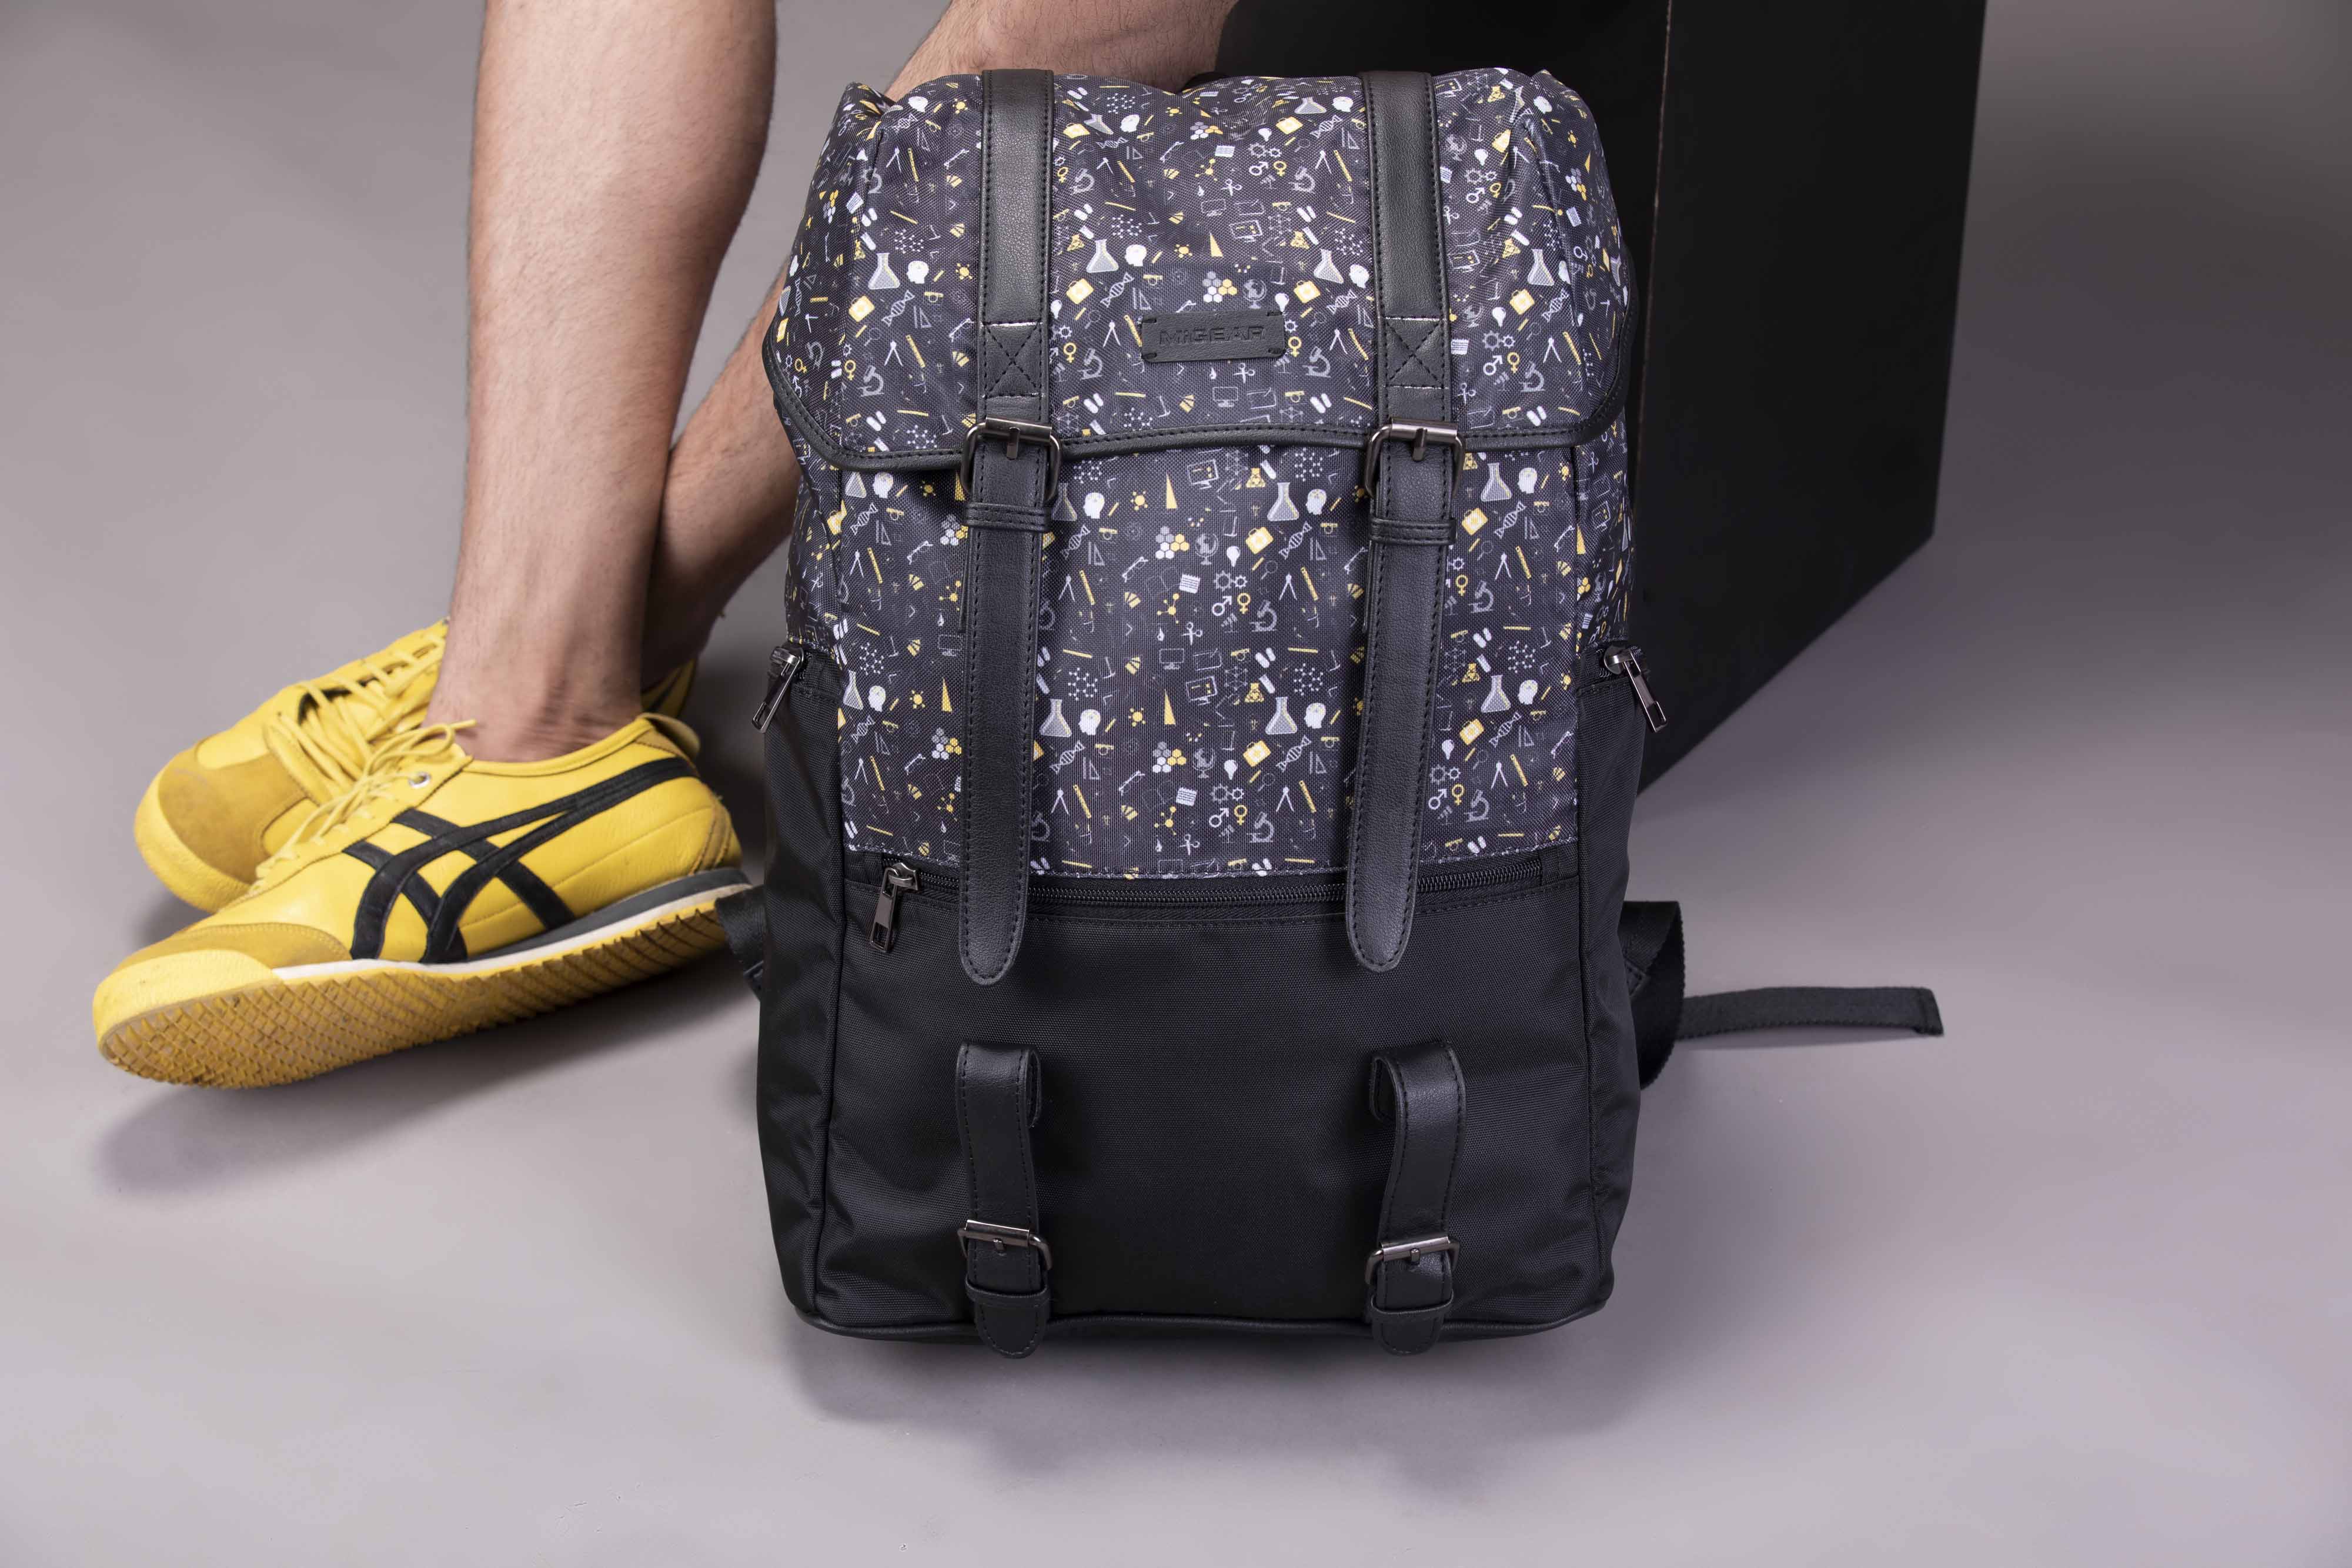 Celestial Buckle Backpack